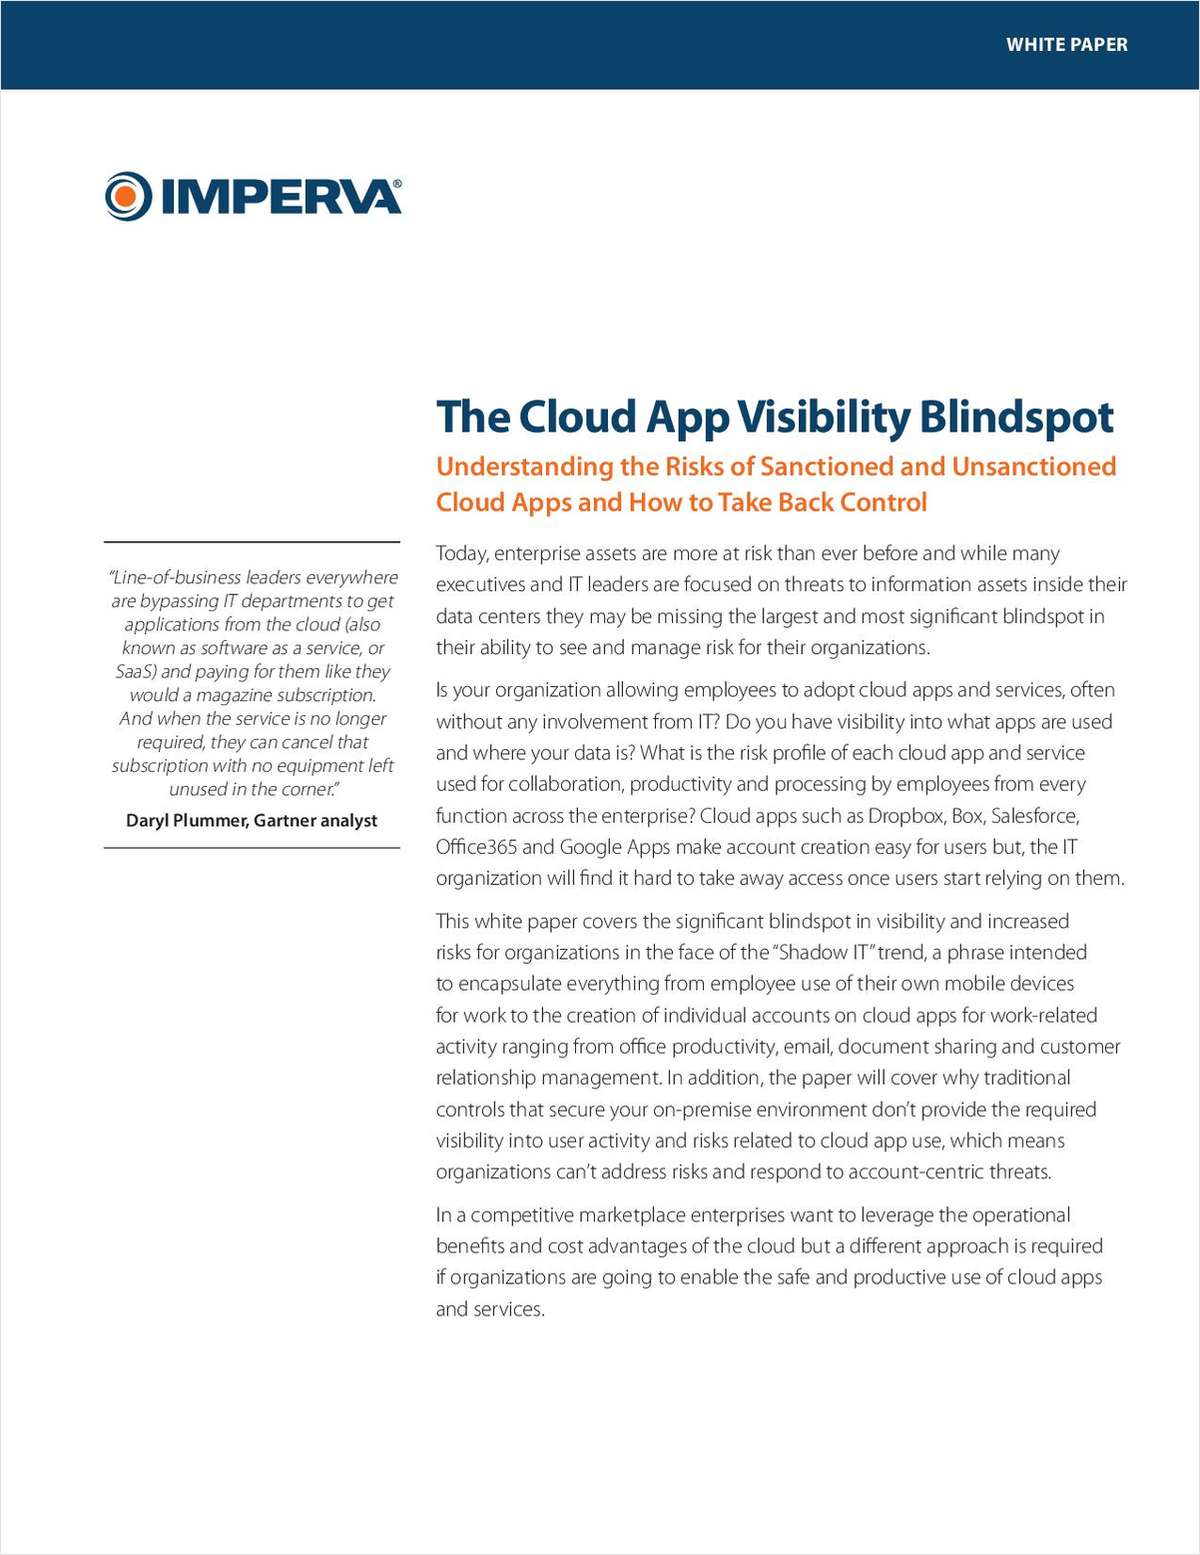 The Cloud App Visibility Blindspot